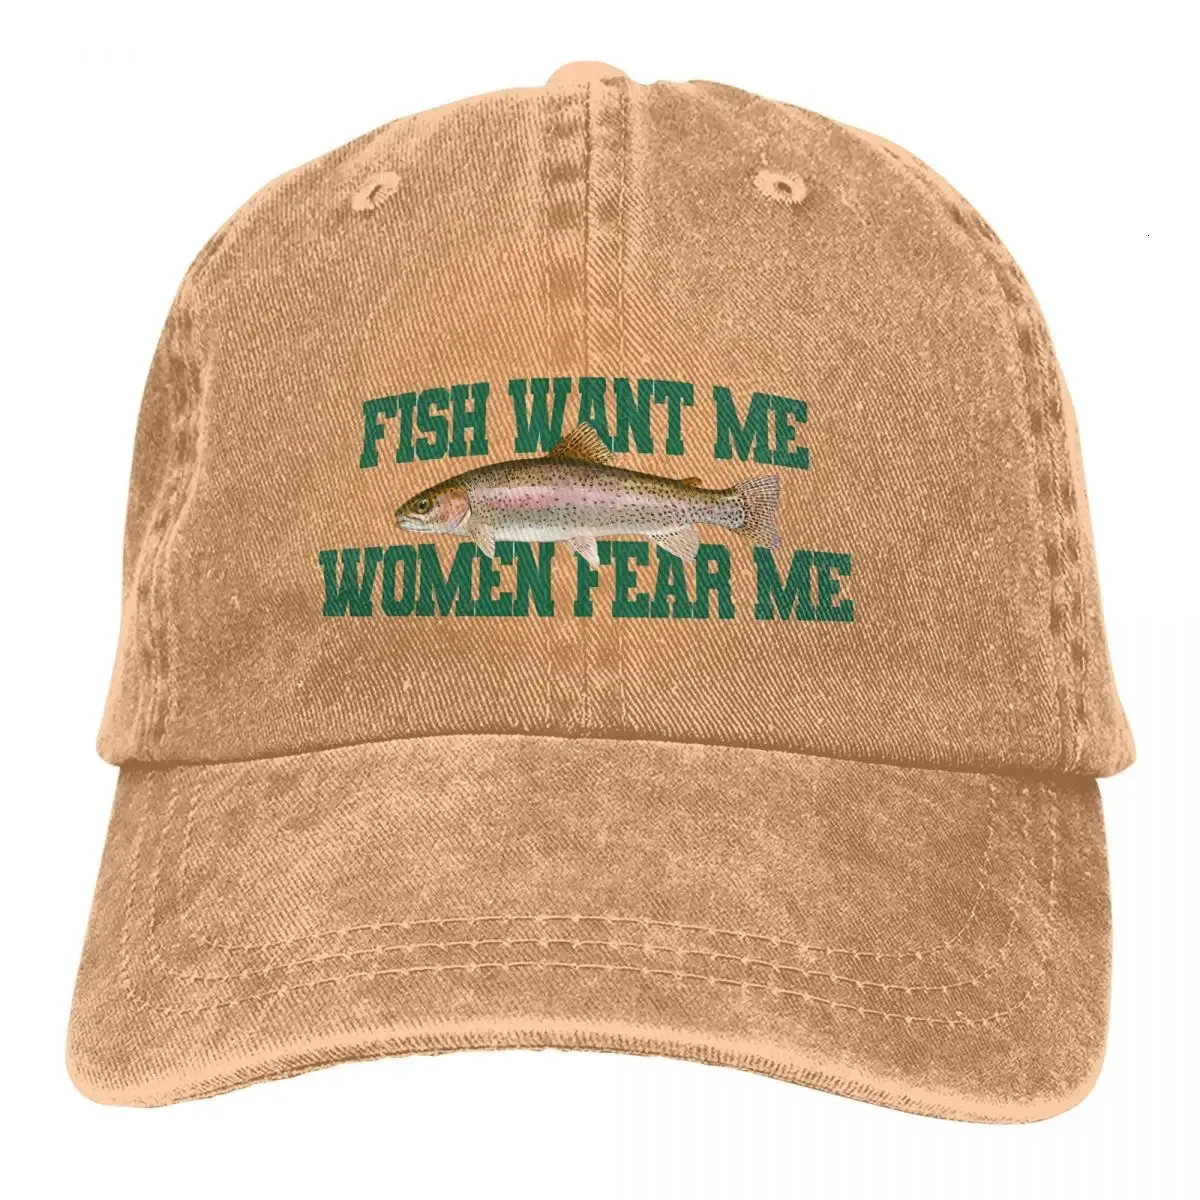 Pure Color Dad Hats Fish Want Me Women Fear Meme Classic Womens